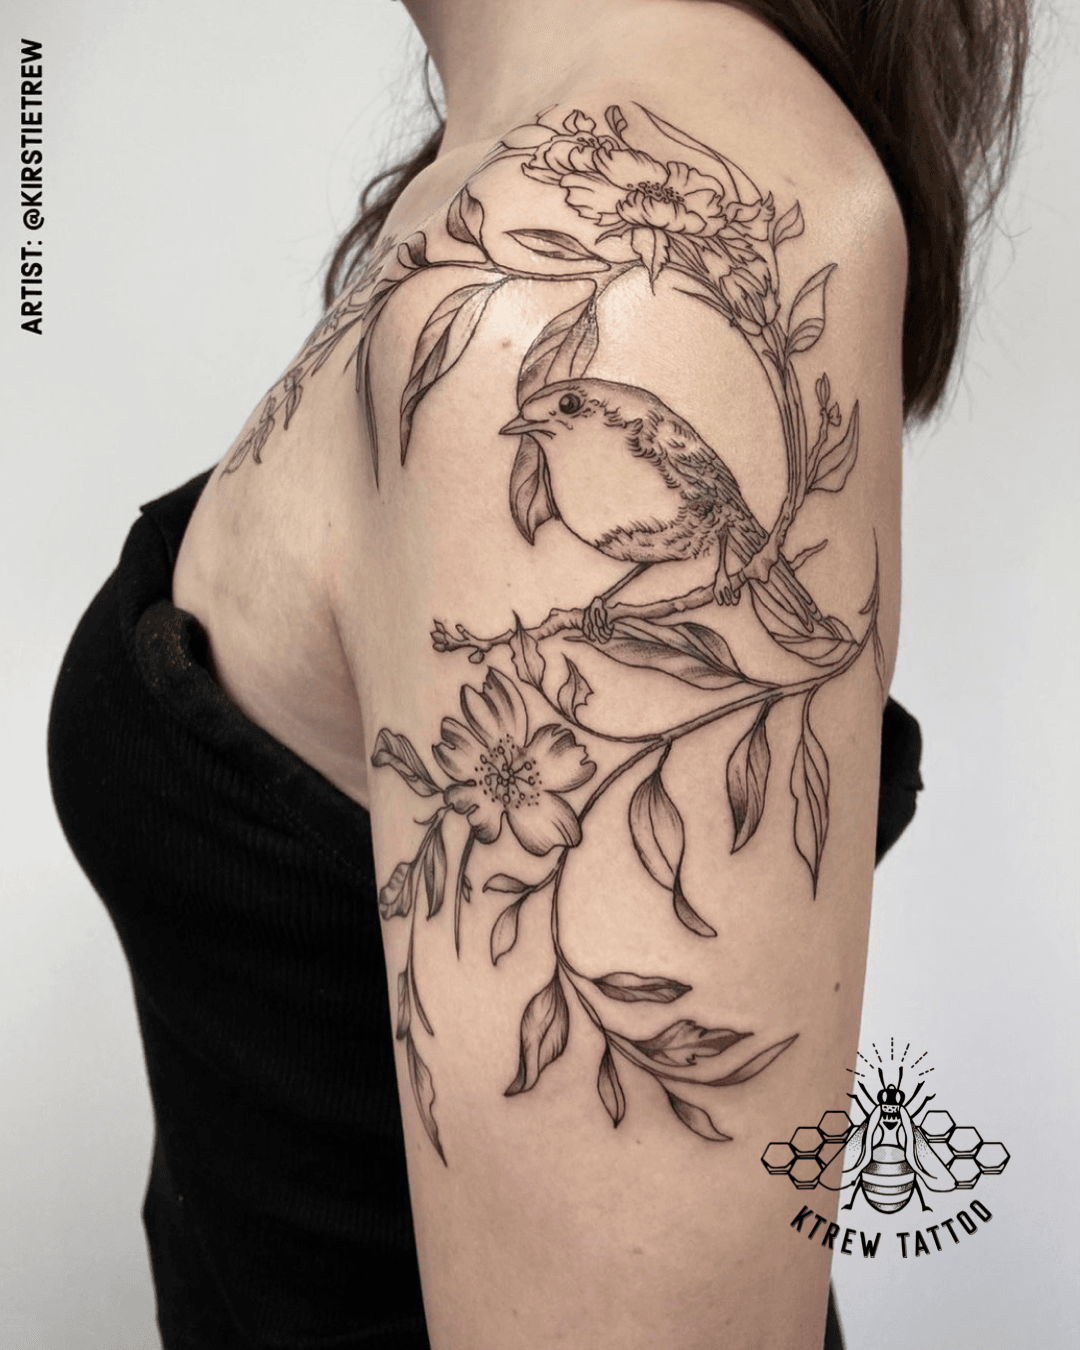 Shoulder blade tattoo of a bird by Ivy Saruzi.